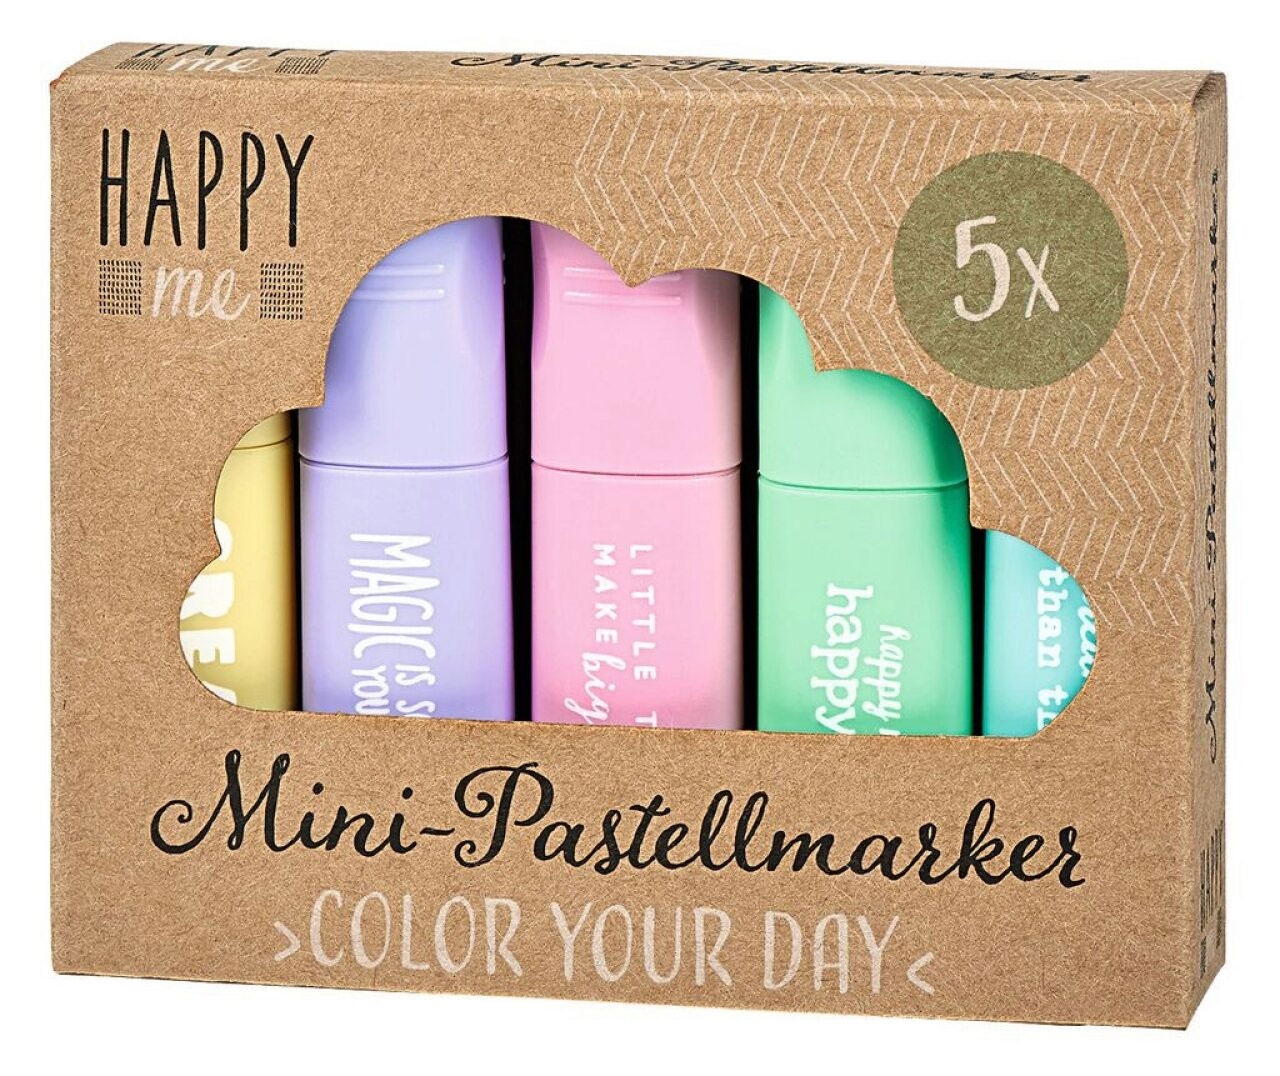 Happy me - Mini Pastellmarker von moses